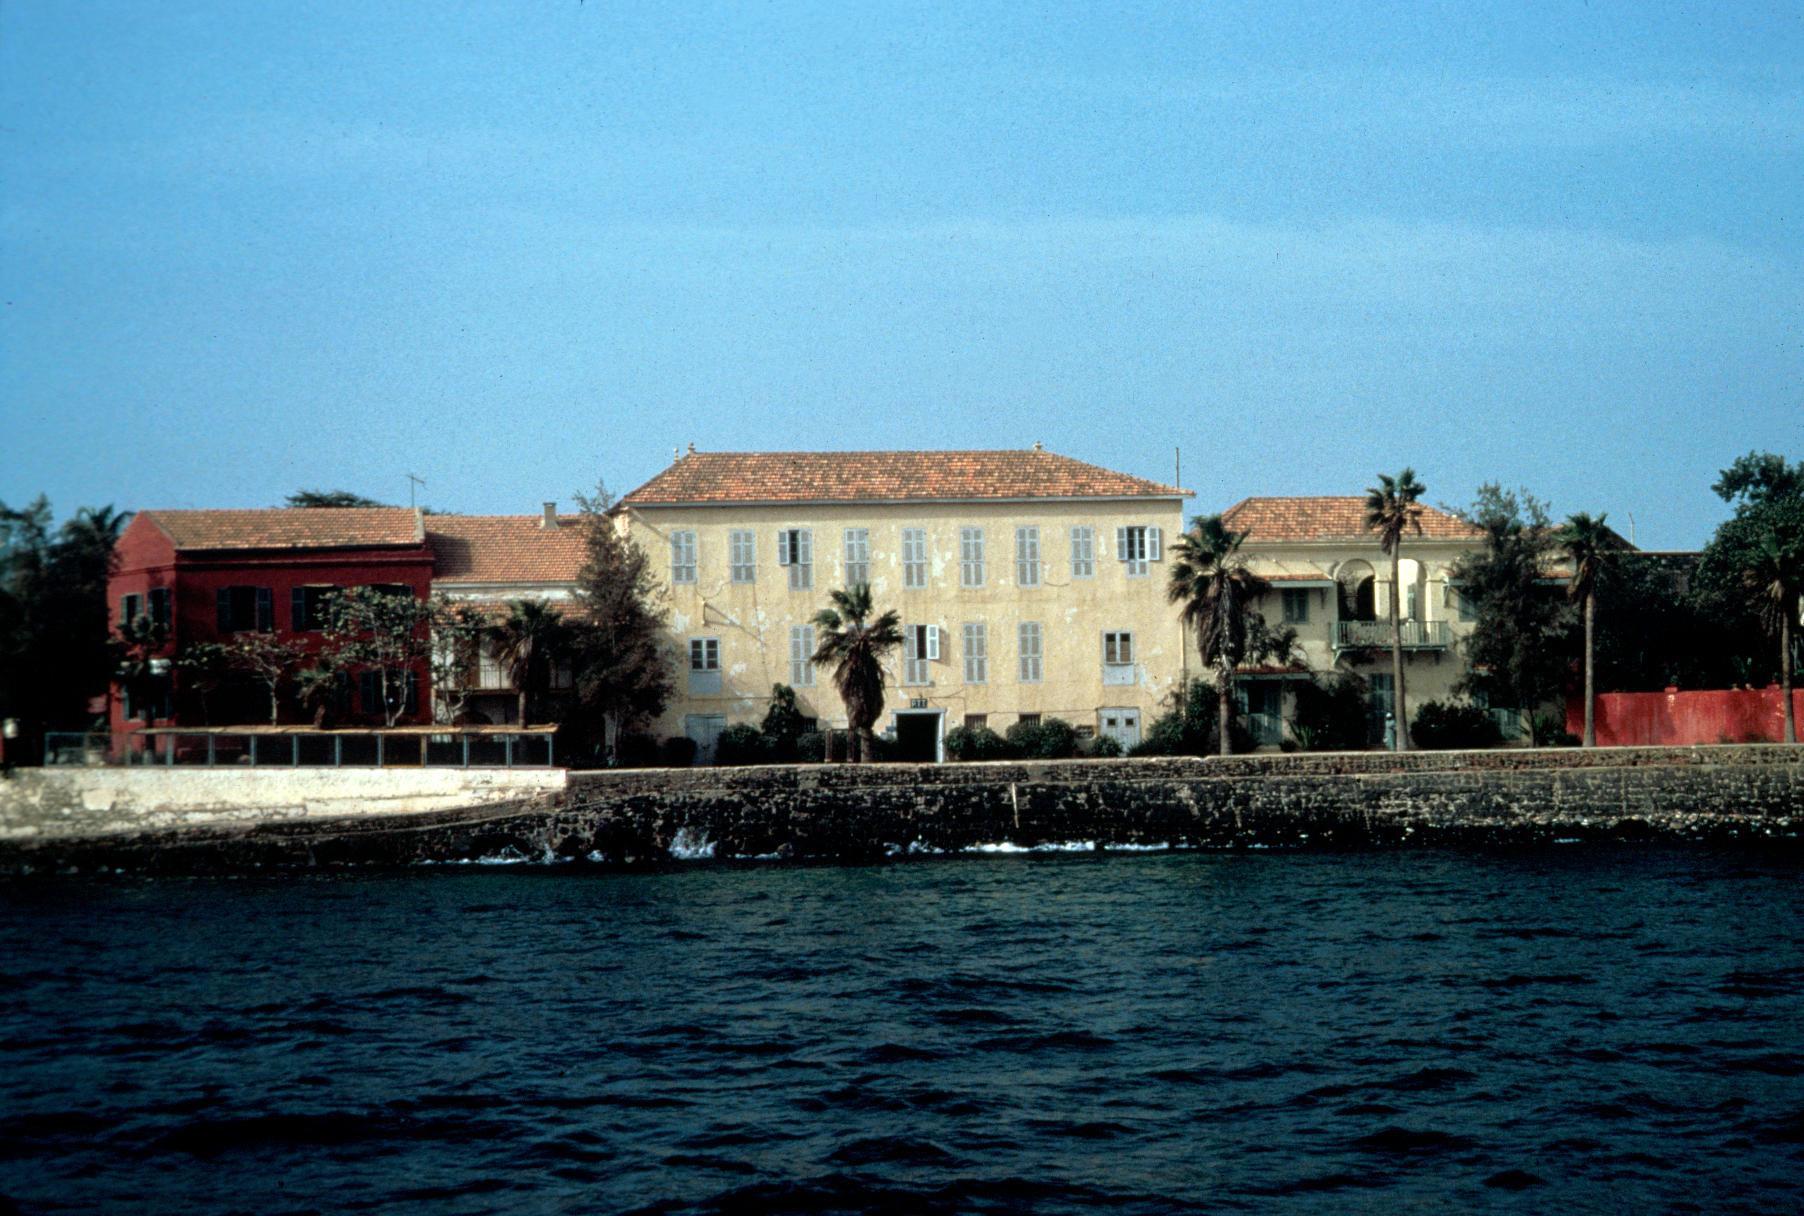 Post Office on the Island of Gorée